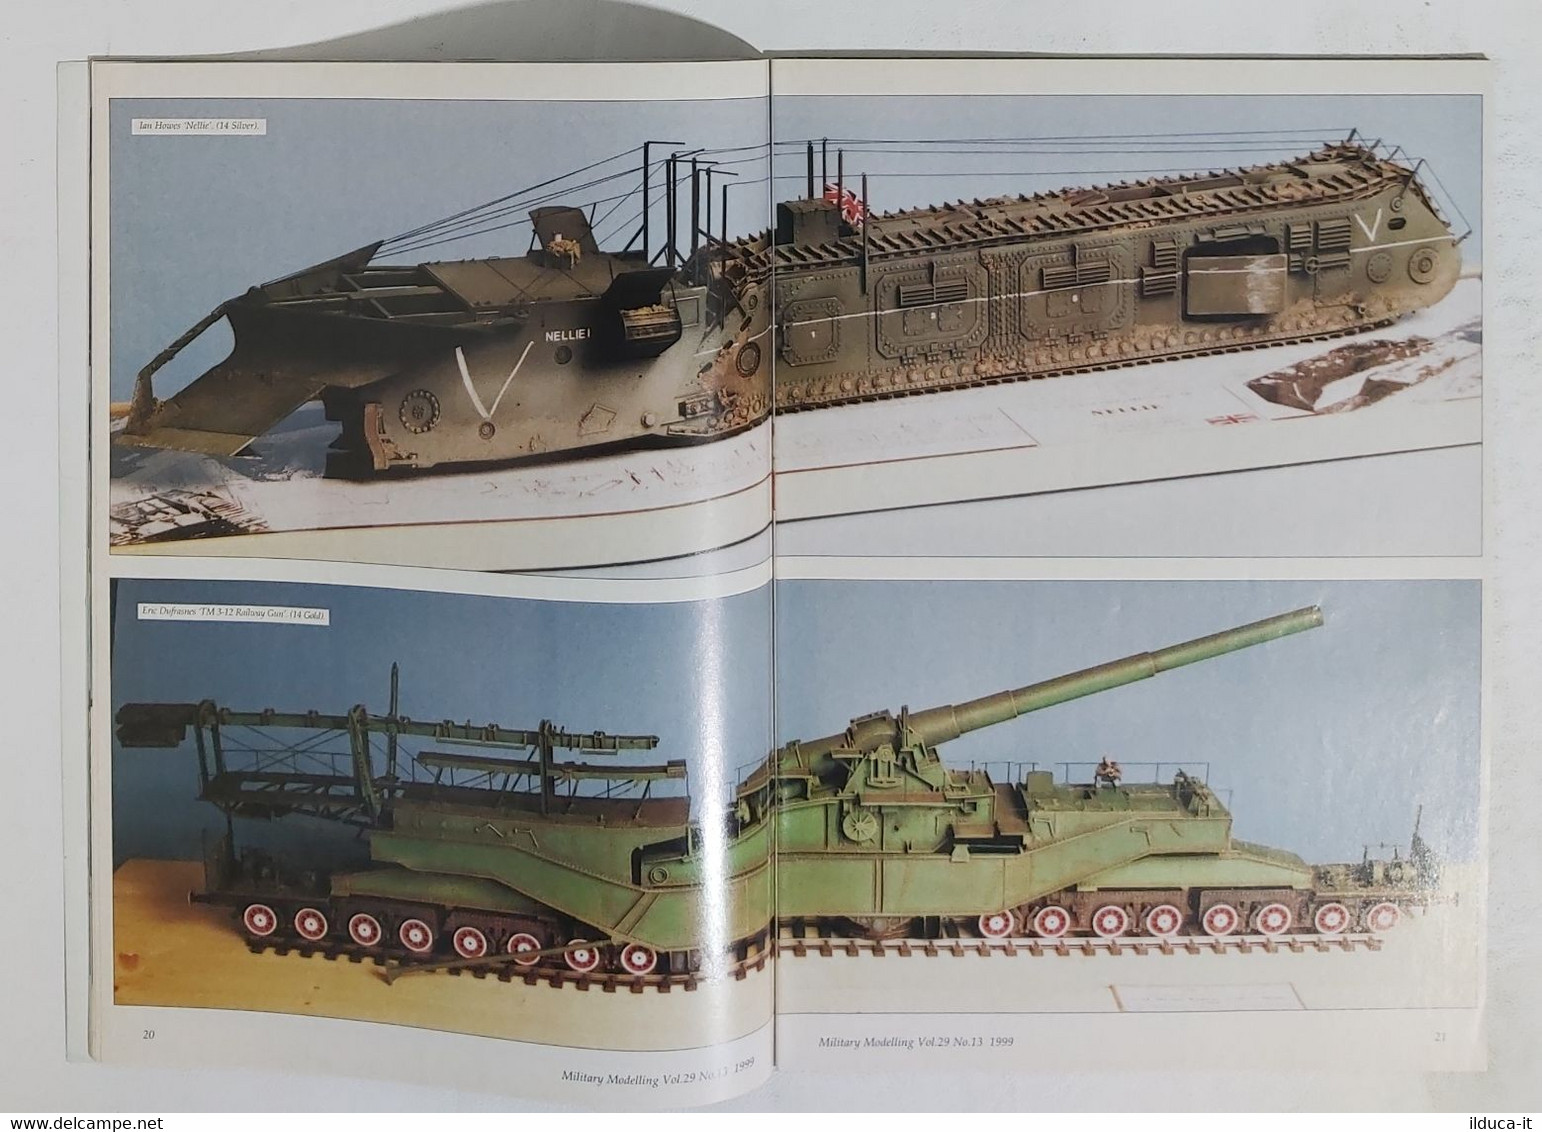 02102 Military Modelling - Vol. 29 - N. 13 - 1999 - England - Bastelspass